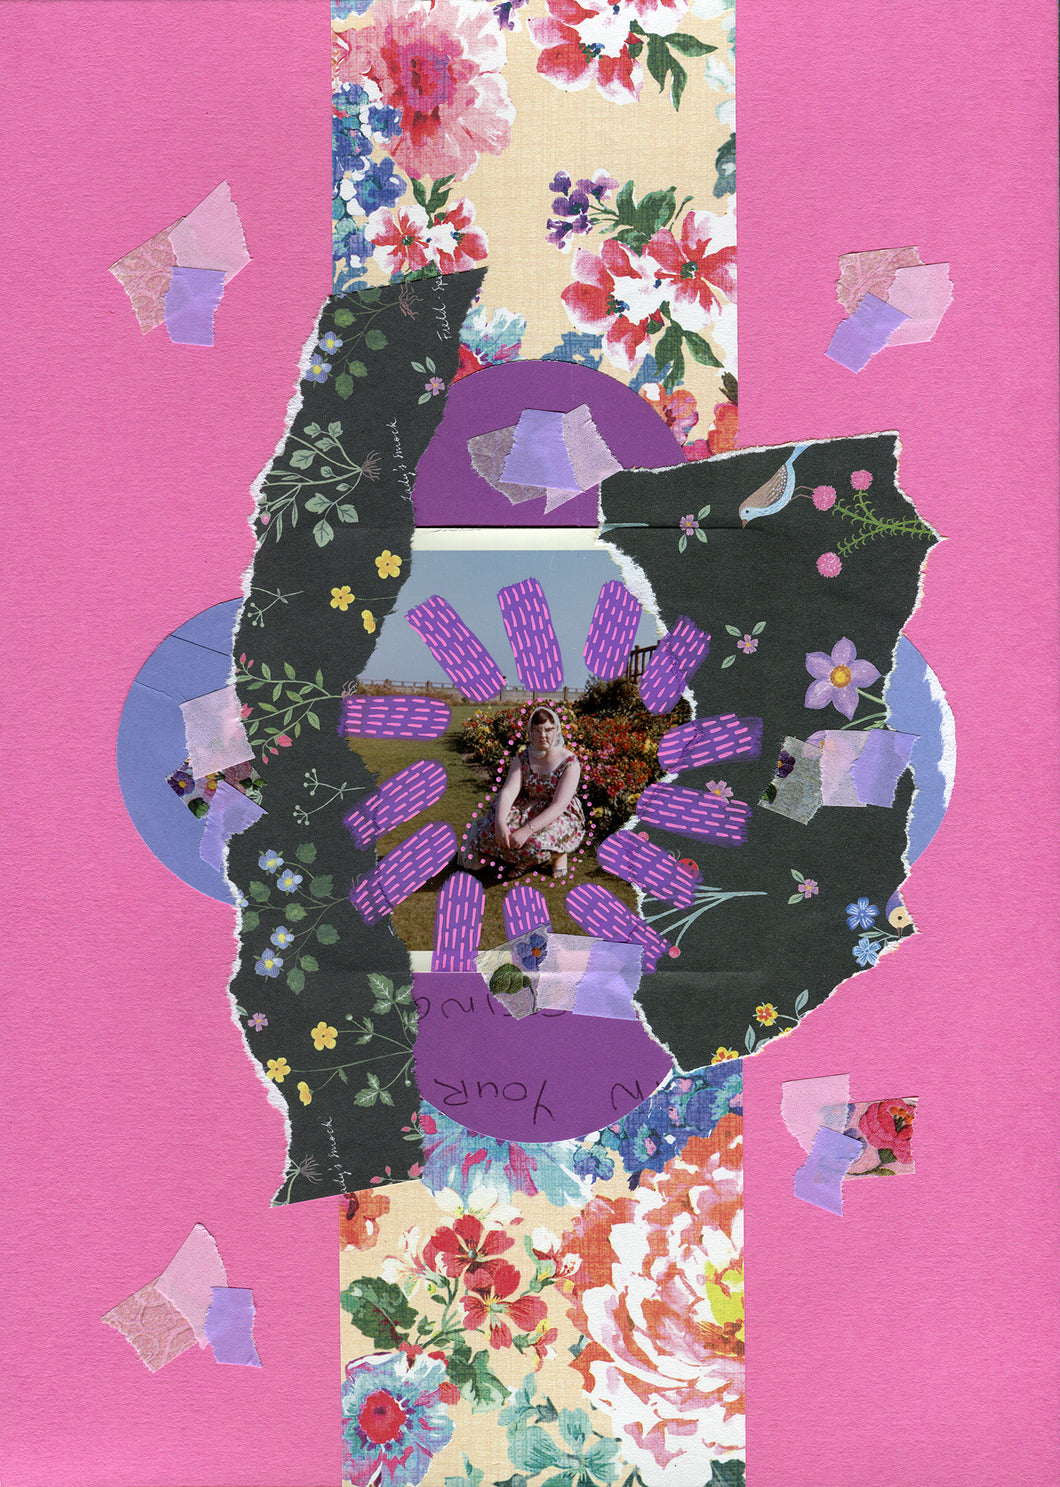 Handmade Mixed Media Collage Artwork On Paper - Naomi Vona Art